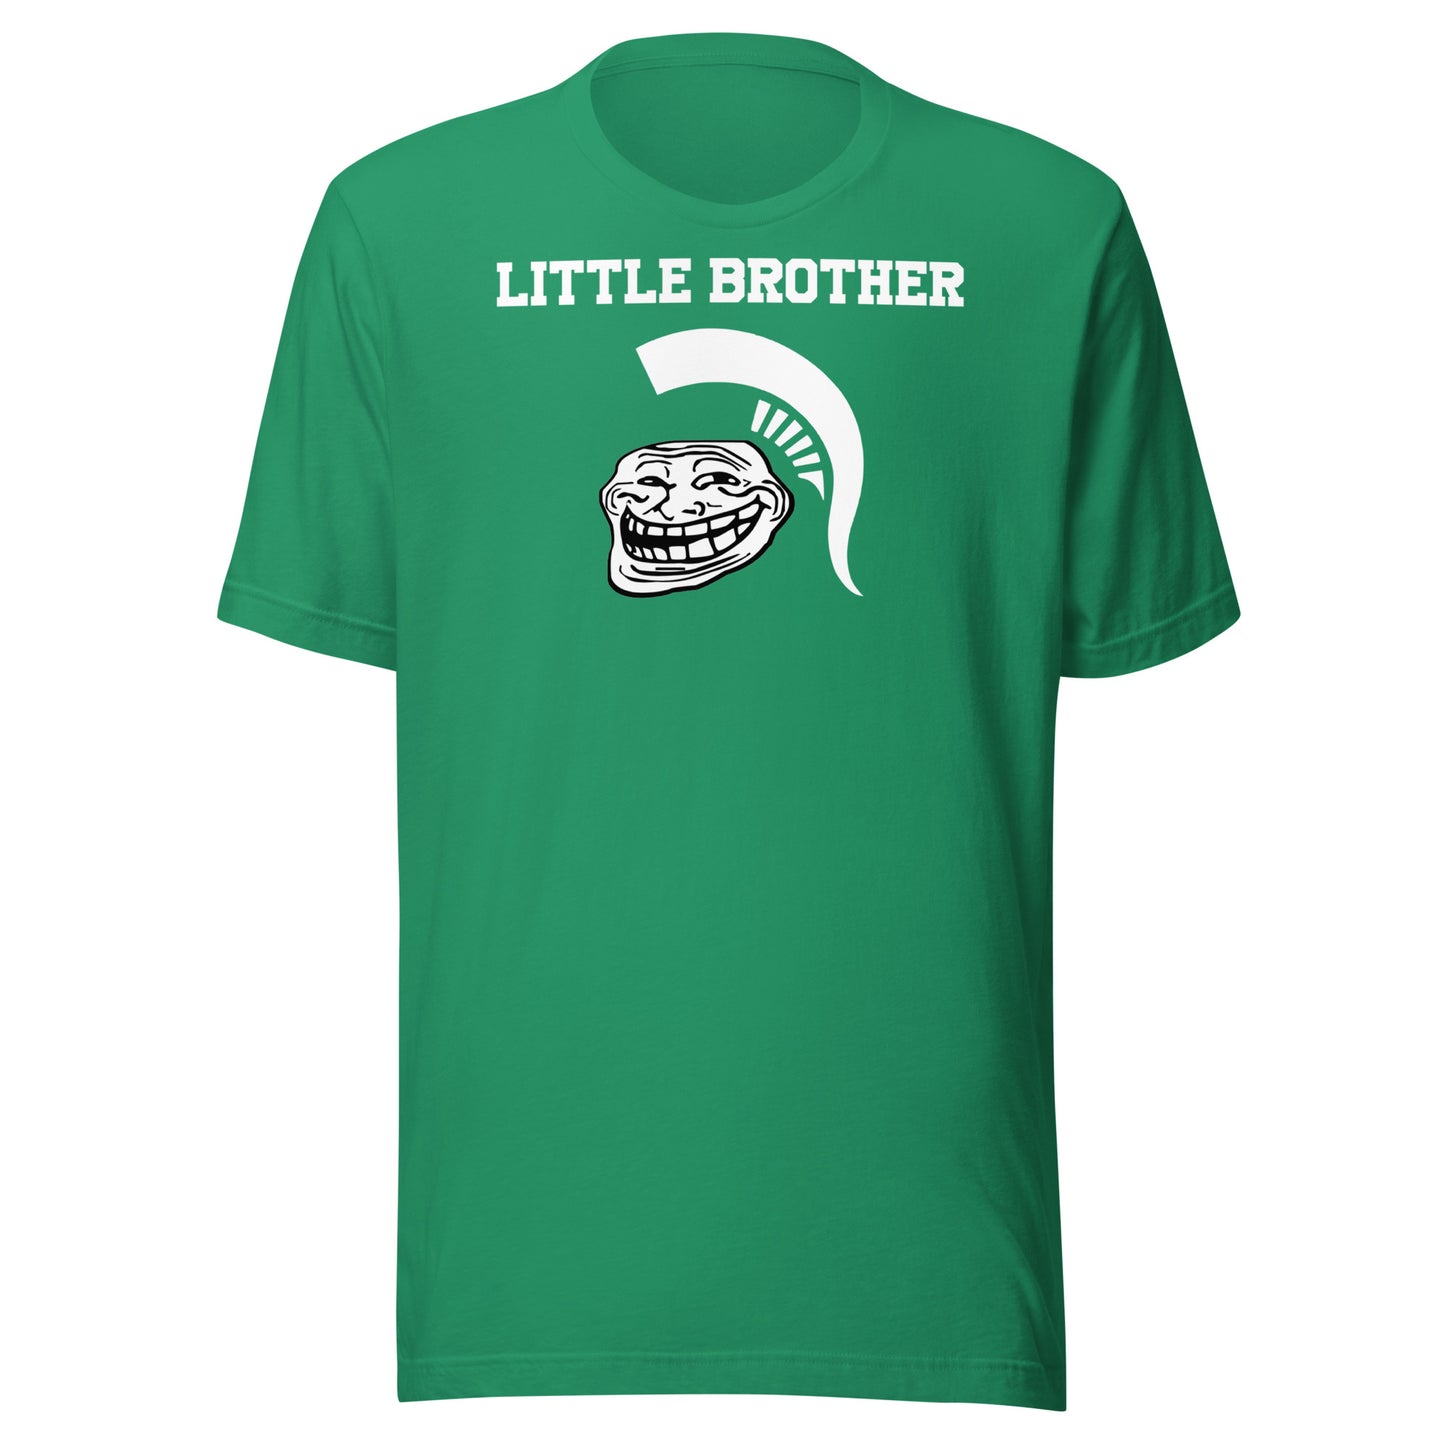 LITTLE BROTHER - TROLL - Unisex t-shirt